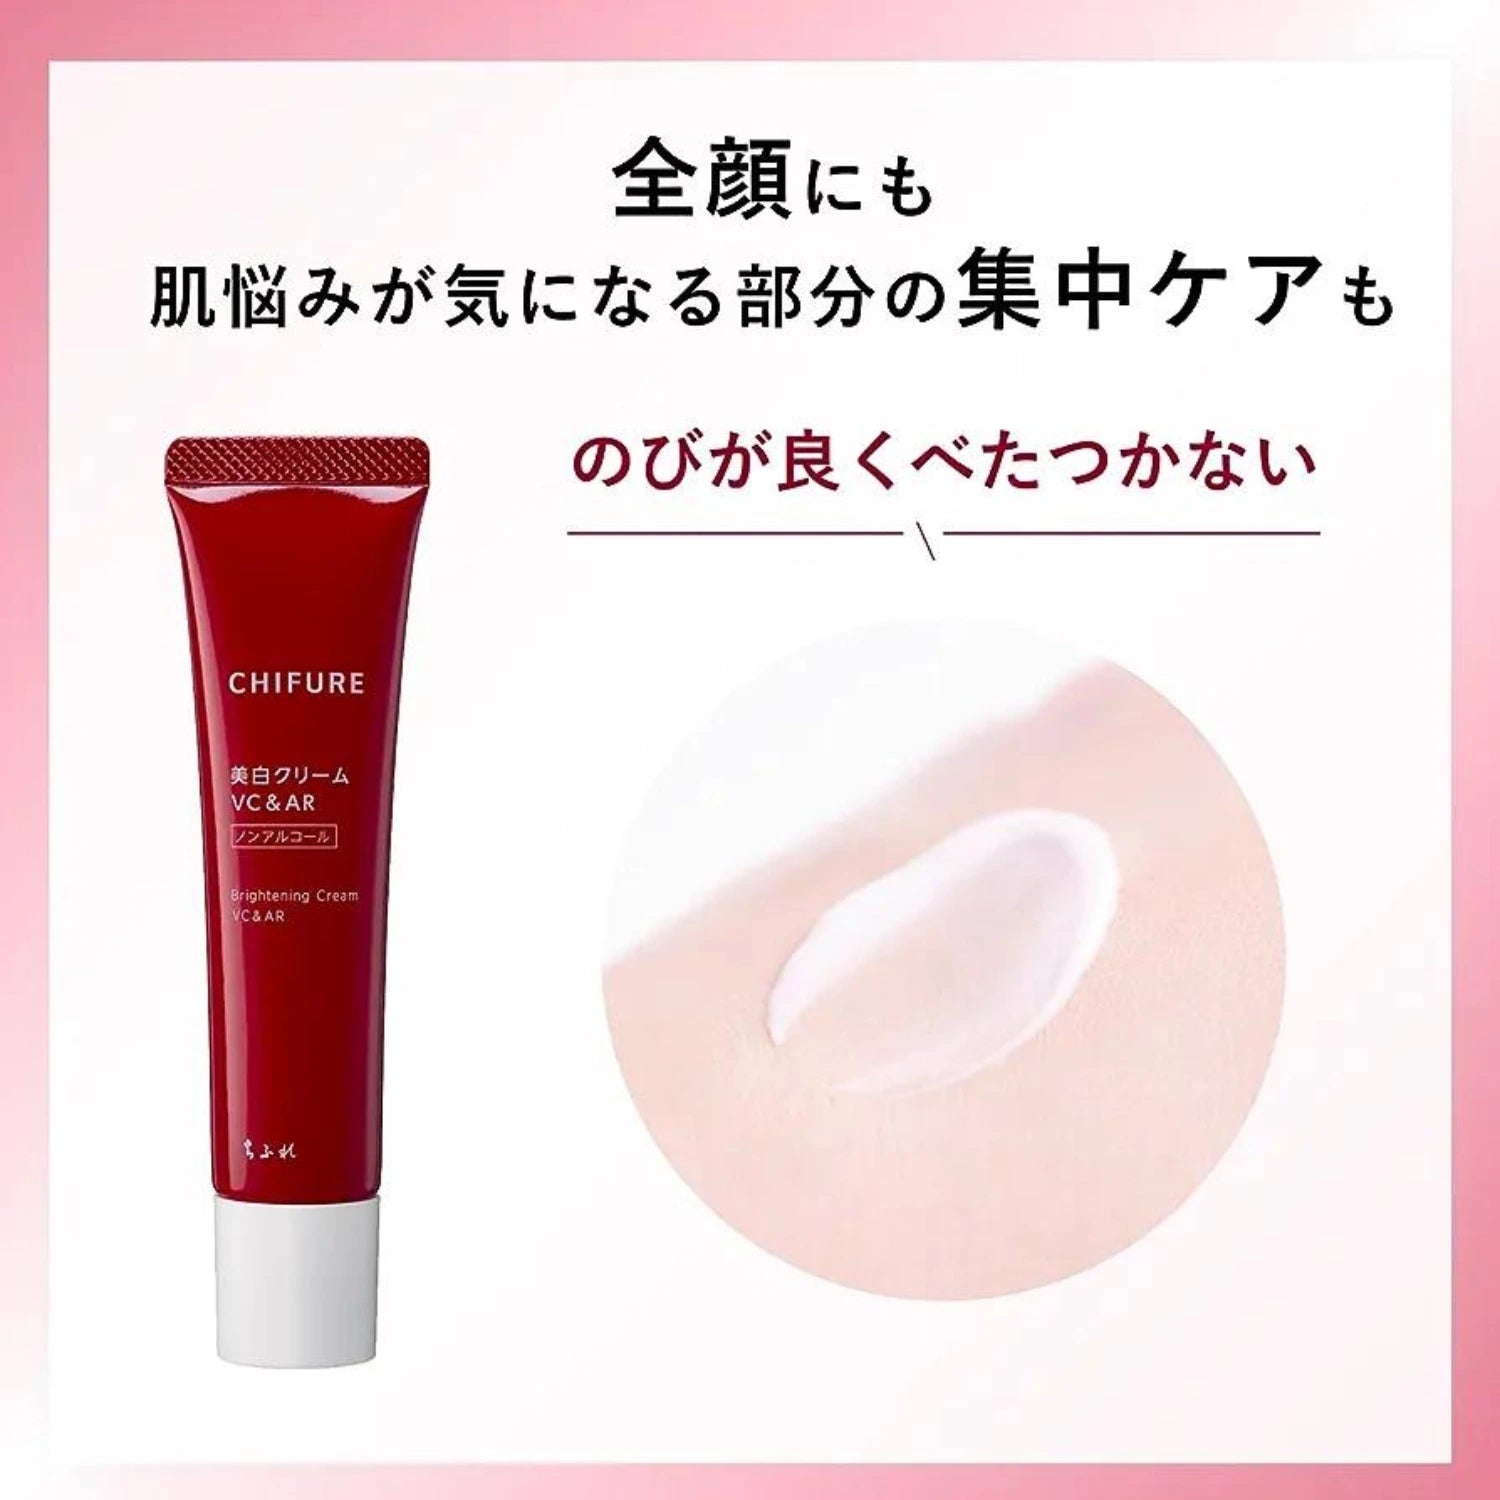 Chifure Brightening Cream Vitamin C & Arbutin 35g - Buy Me Japan